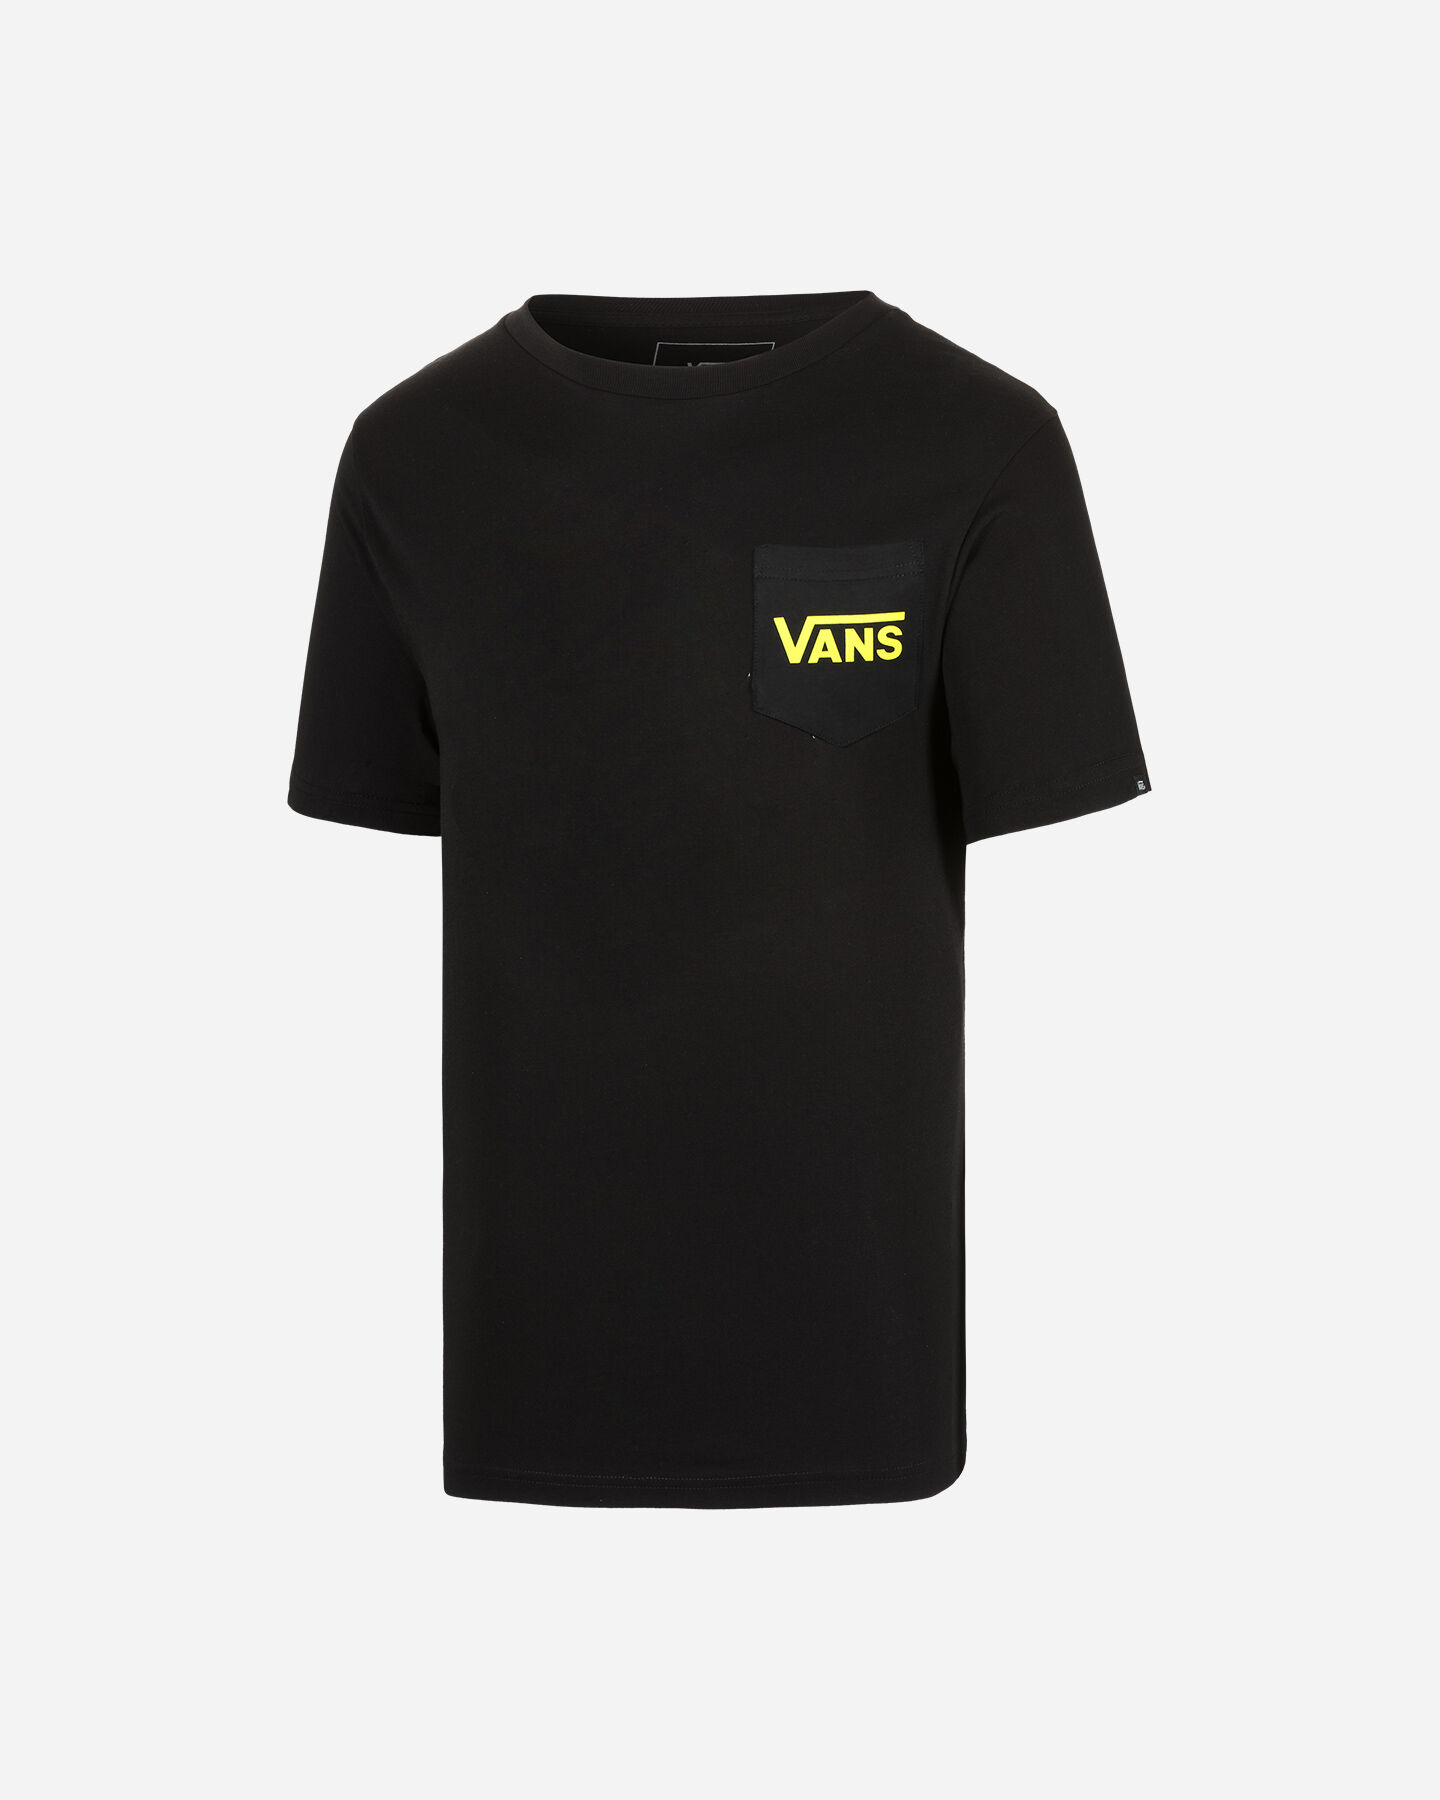  T-Shirt VANS OTW CLASSIC M S5186623|W08|XS scatto 0